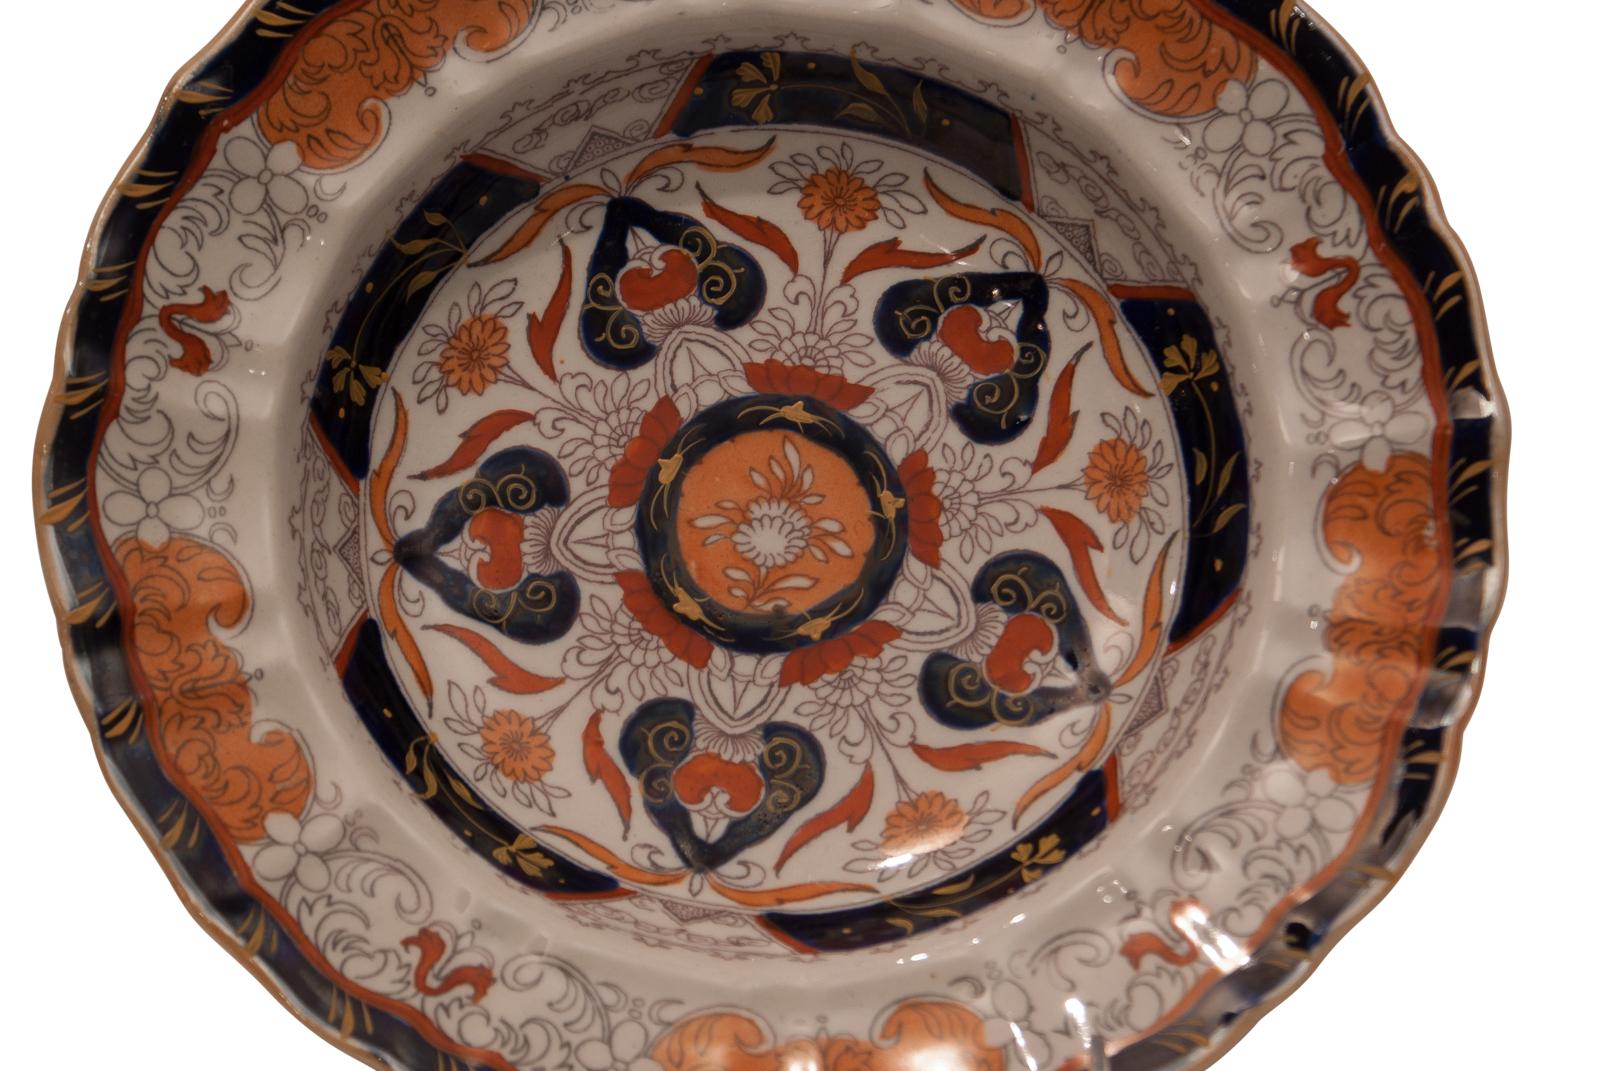 Regency 14 Mason's Ironstone Bowls Inspired by Asian Designs, circa 1825